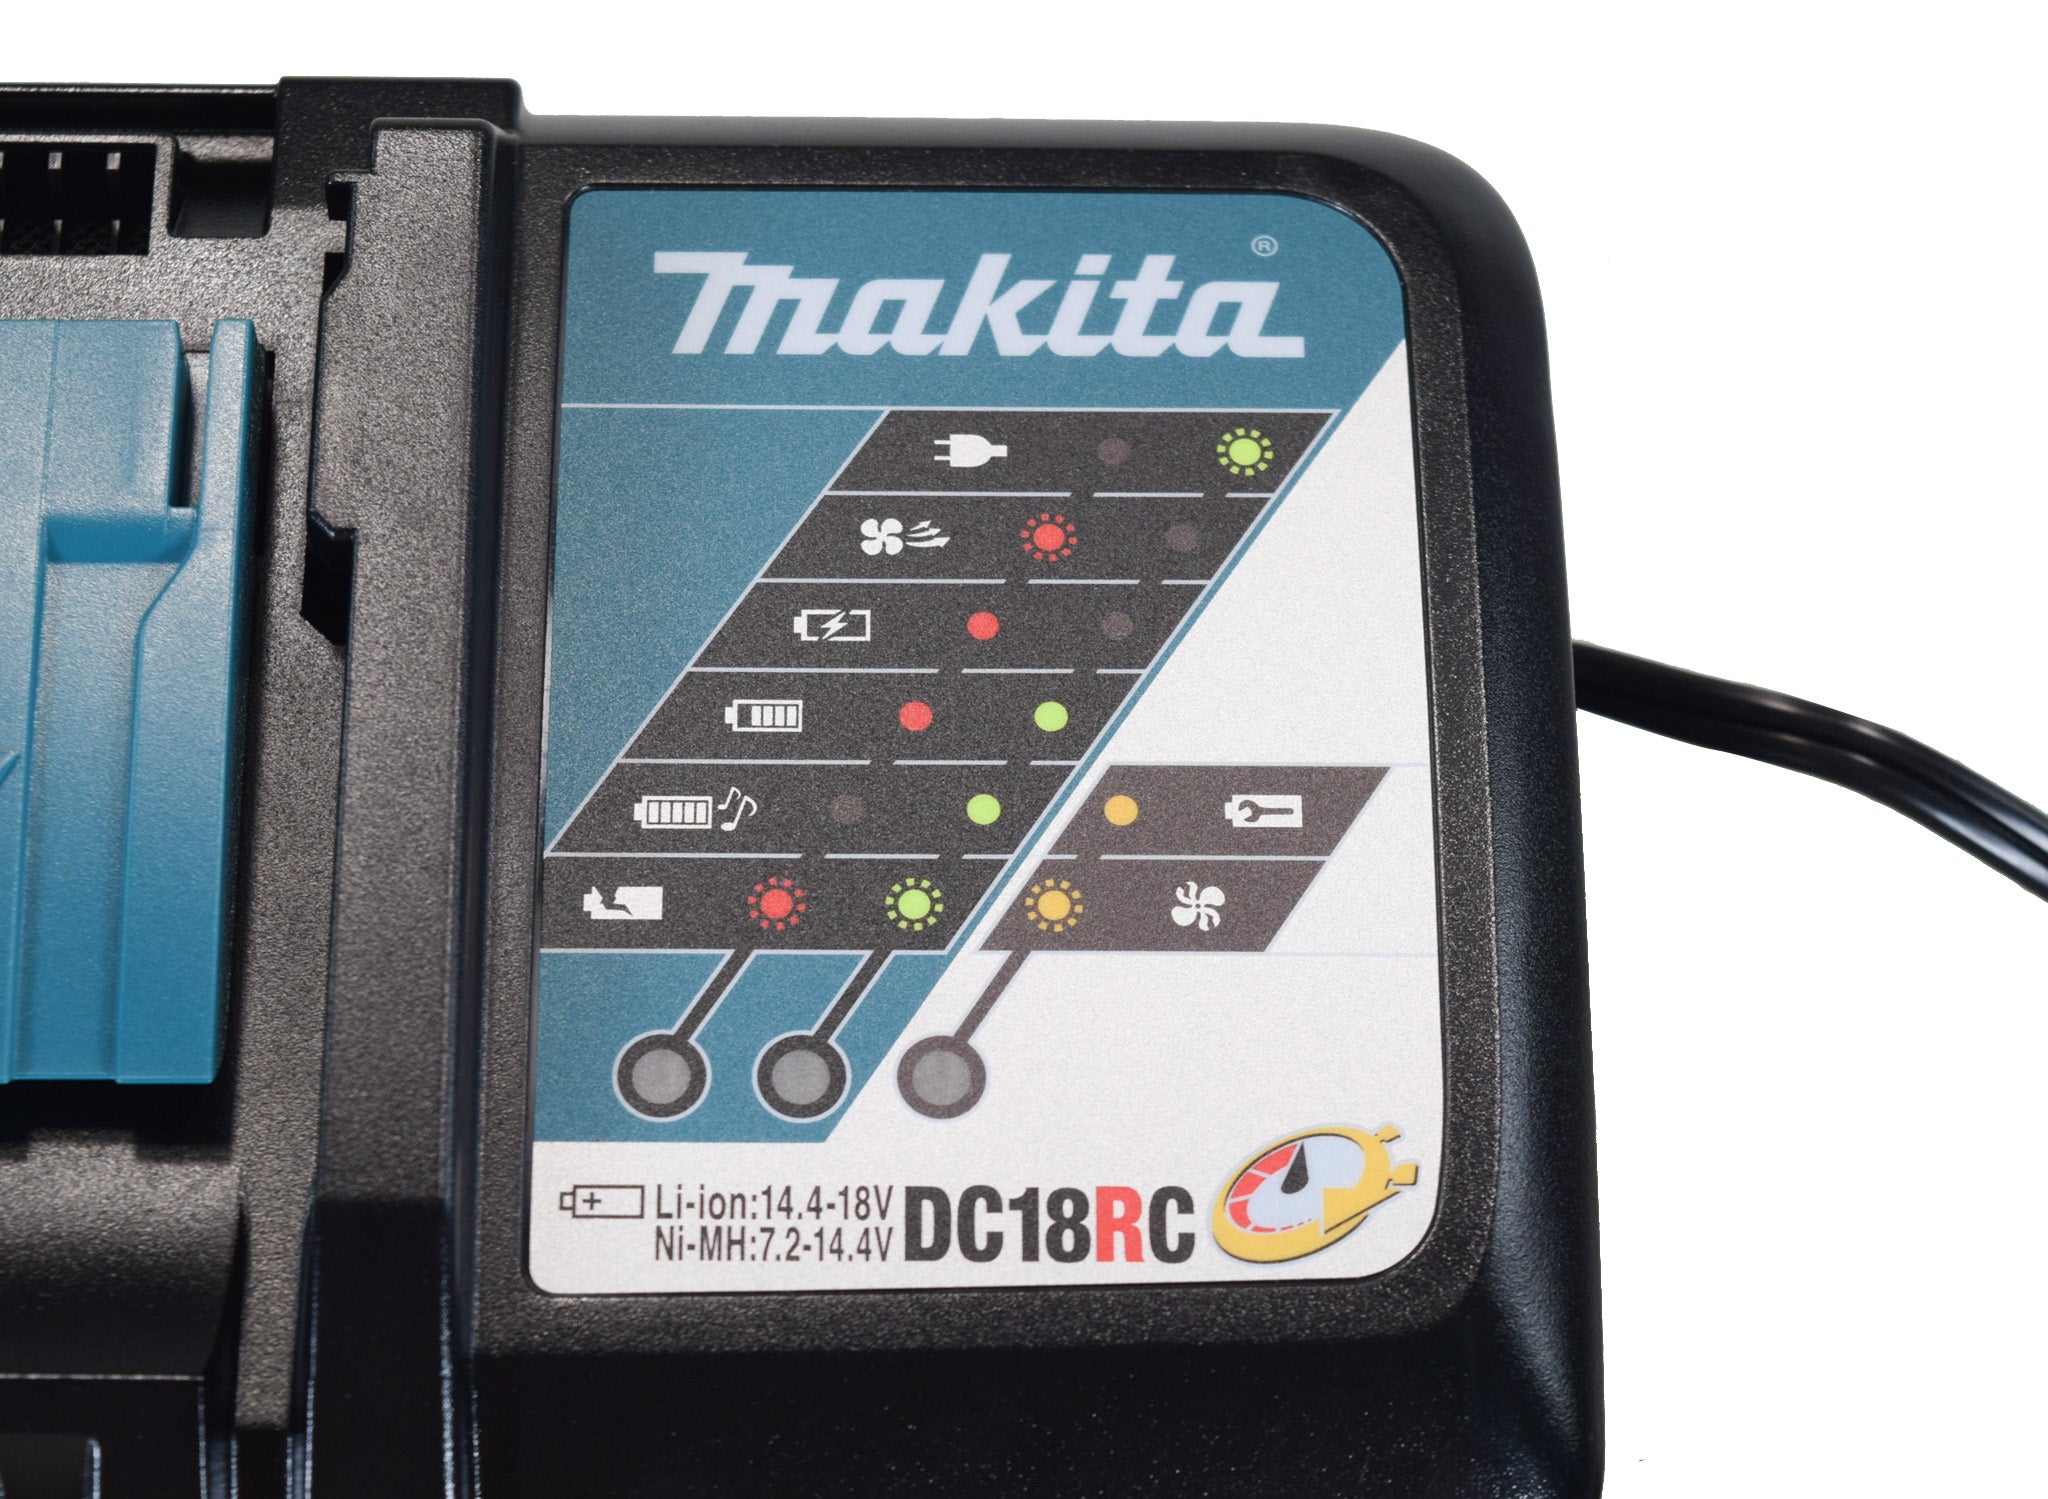 Makita 18V Lithium-Ion Rapid Optimum Battery Charger